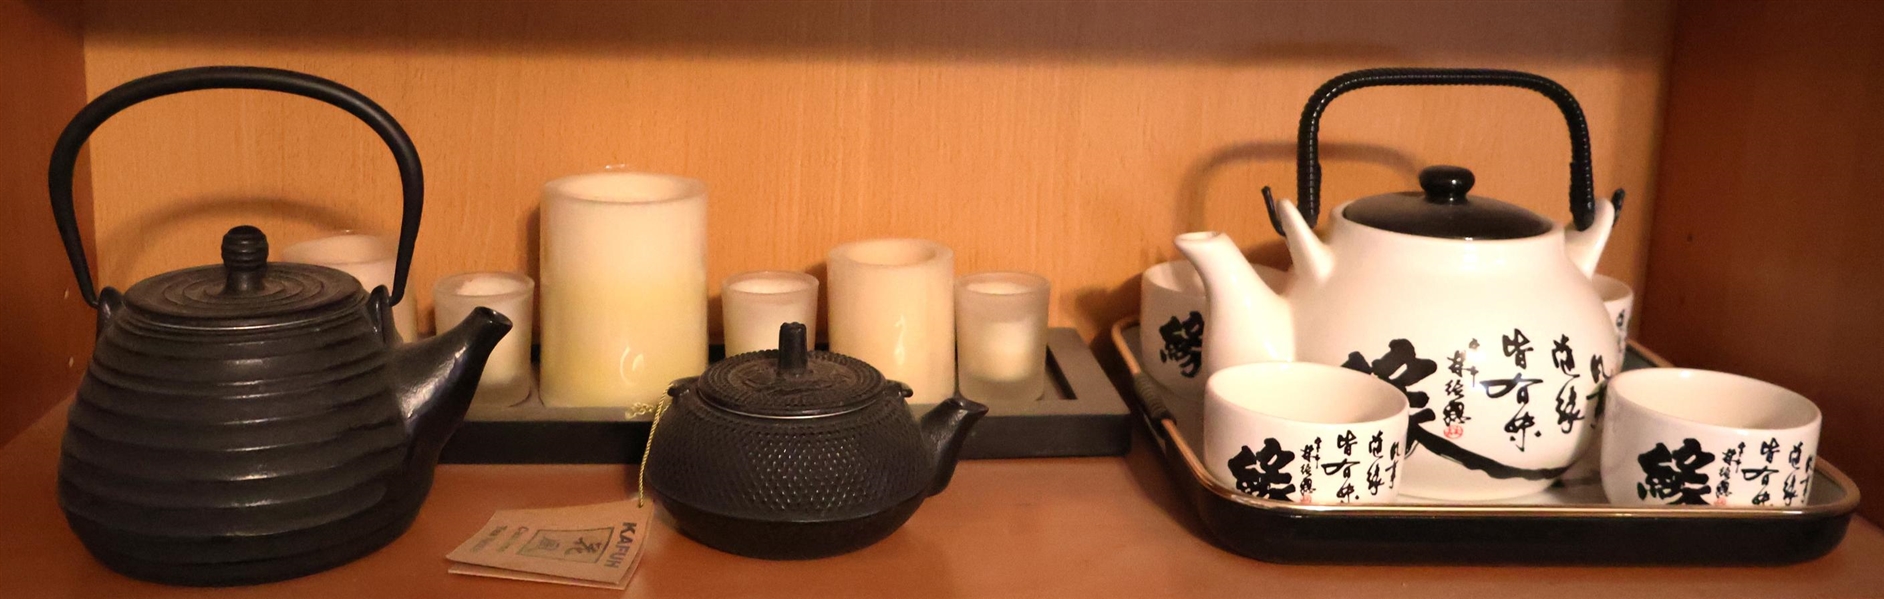 Shelf Lot including Kafuh Cast Iron Tea Kettle, Larger Cast Iron Tea Kettle, Tray of Candles, and Asian Tea Set with Tray and Cups